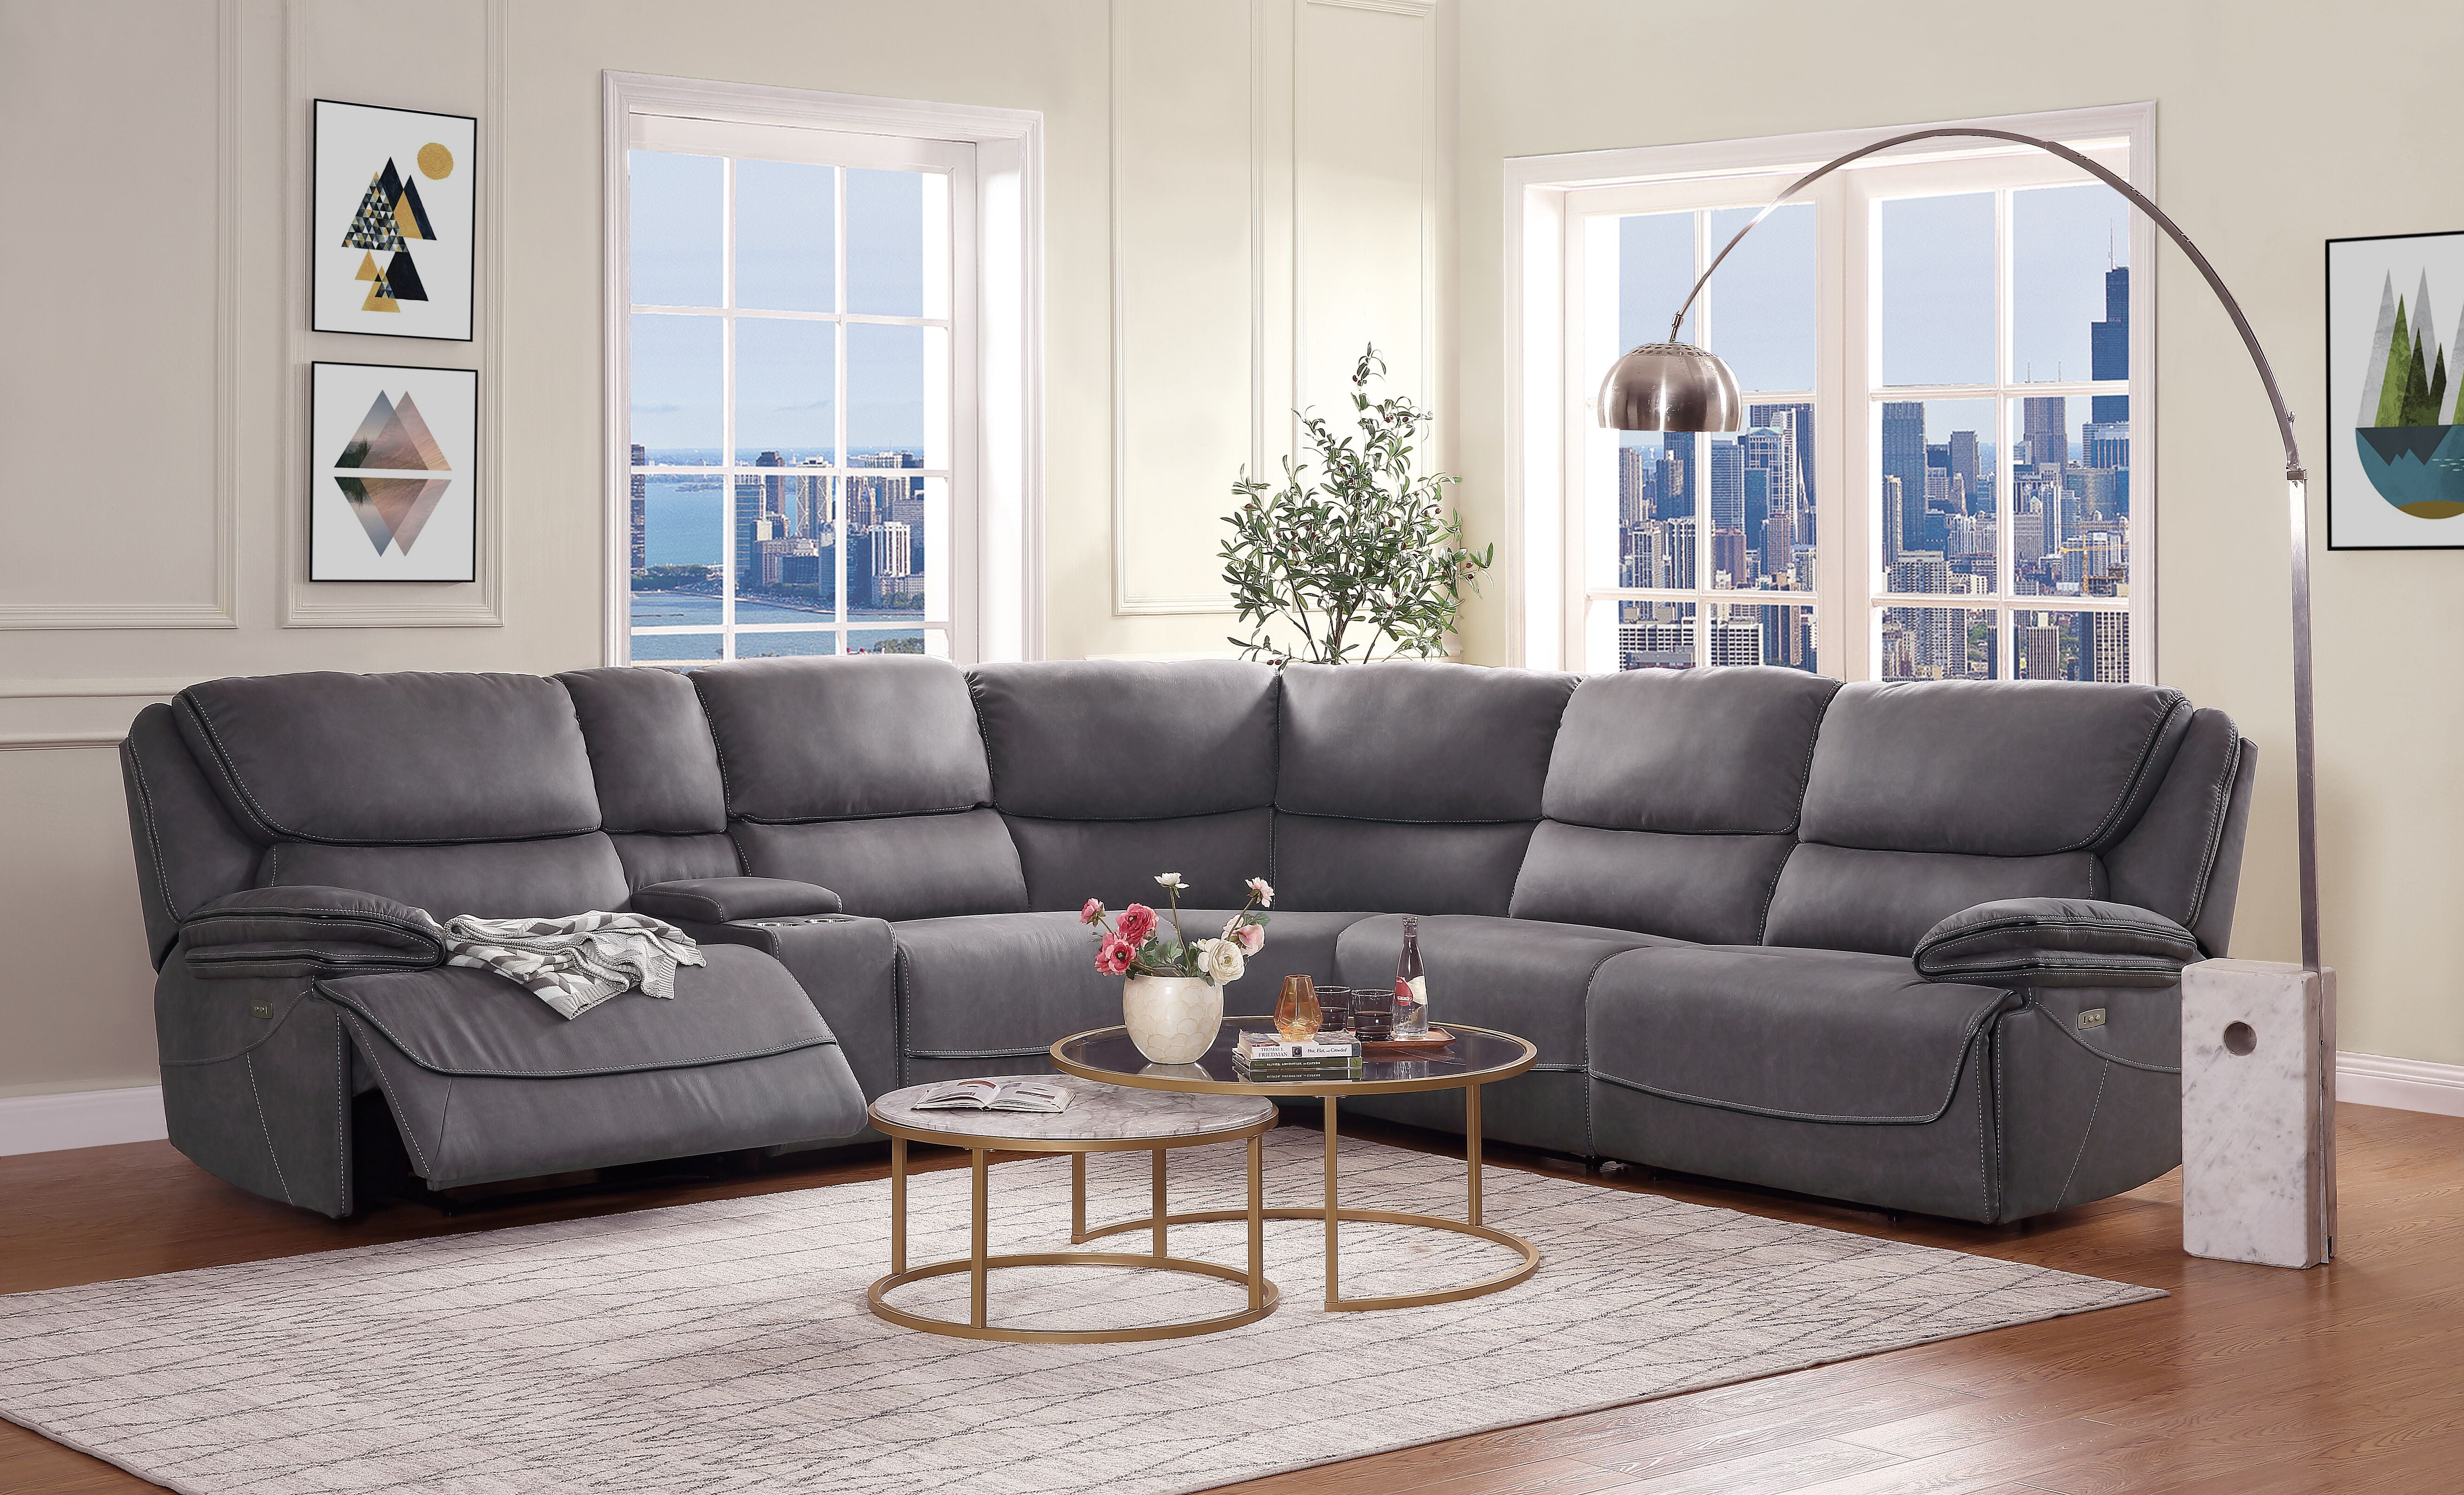 Acme Neelix Wooden Frame Sectional Sofa in Seal Gray Fabric - Walmart.com